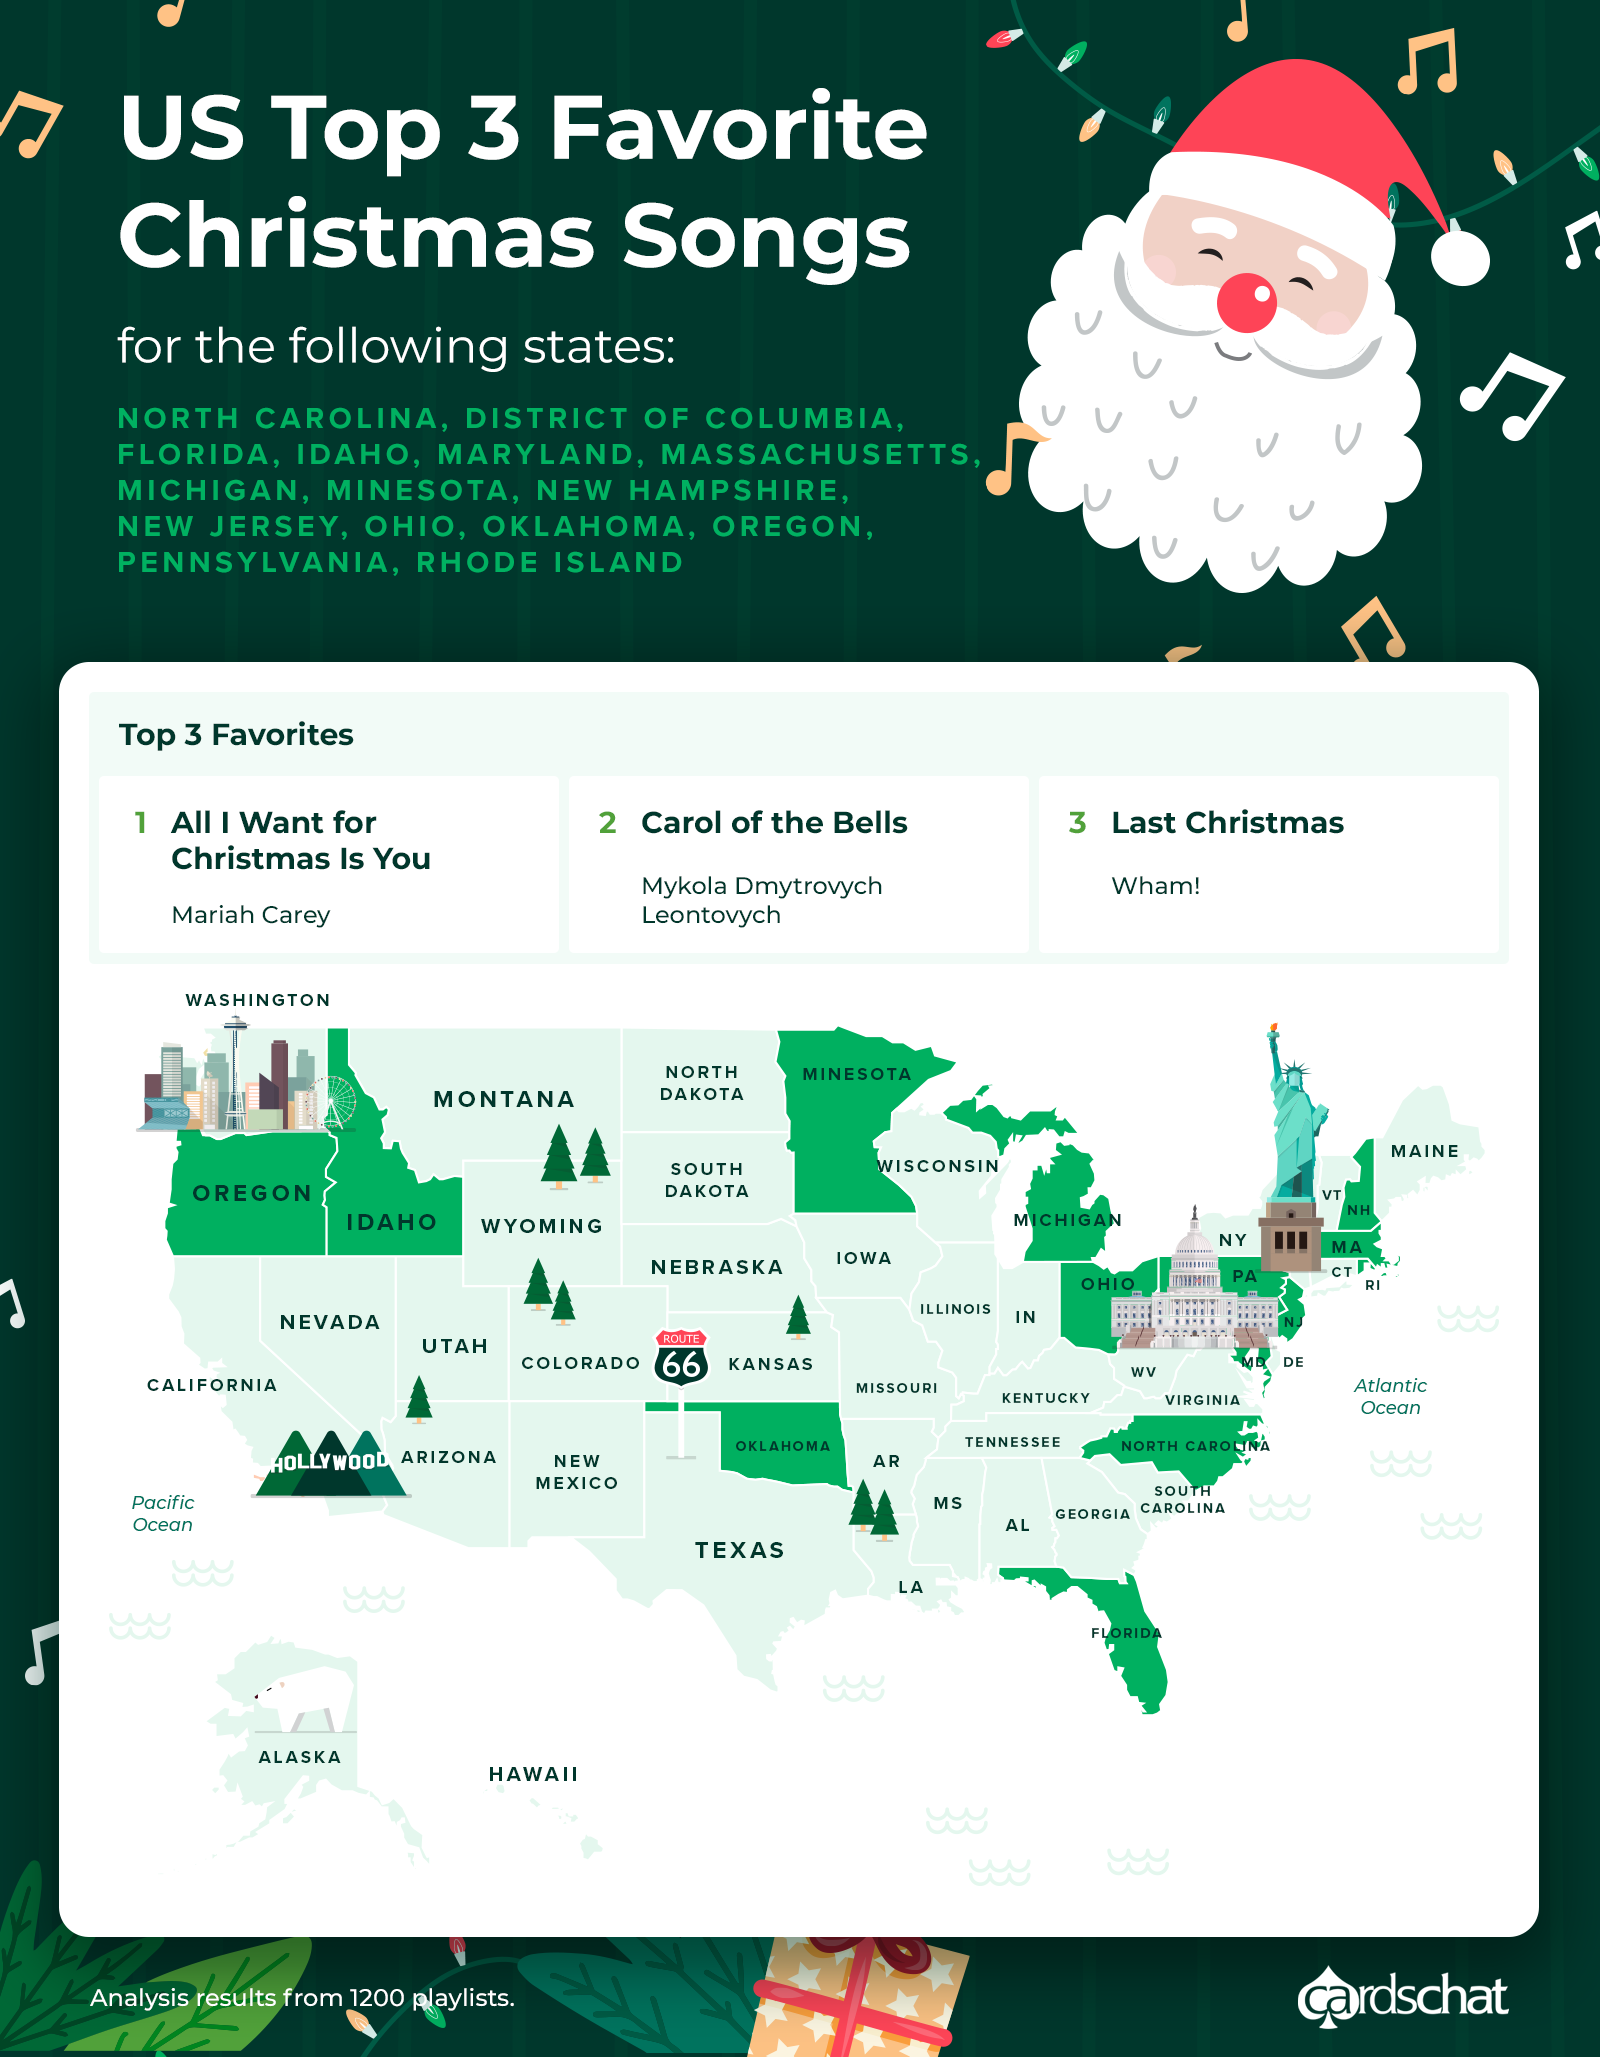 Favorite Christmas songs in the US